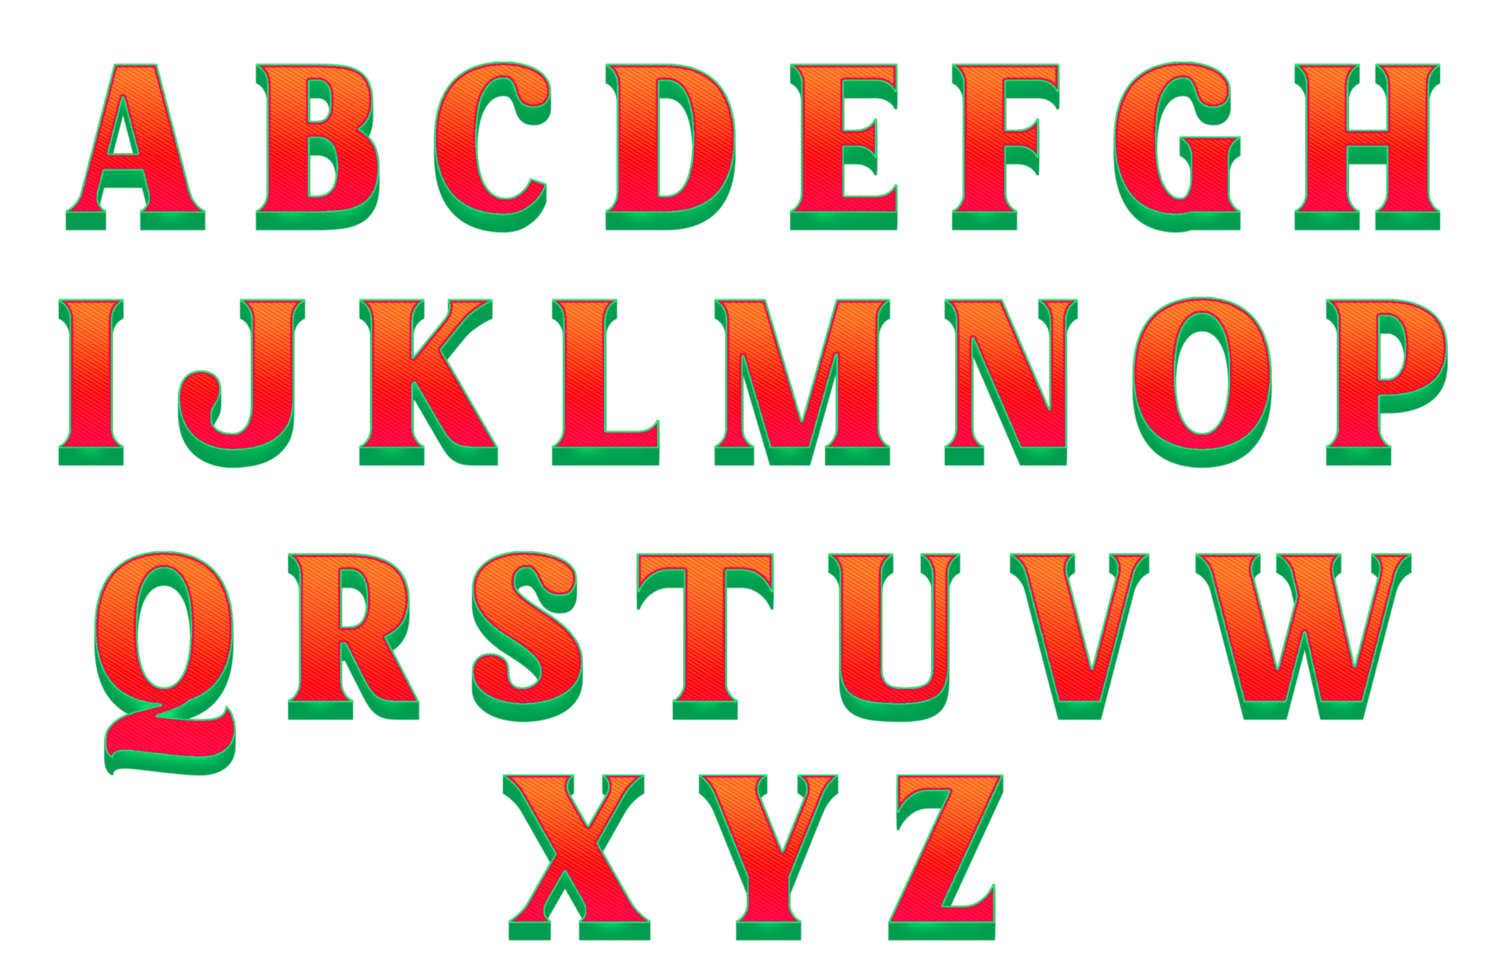 letras do alfabeto 3d de cor laranja e verde png